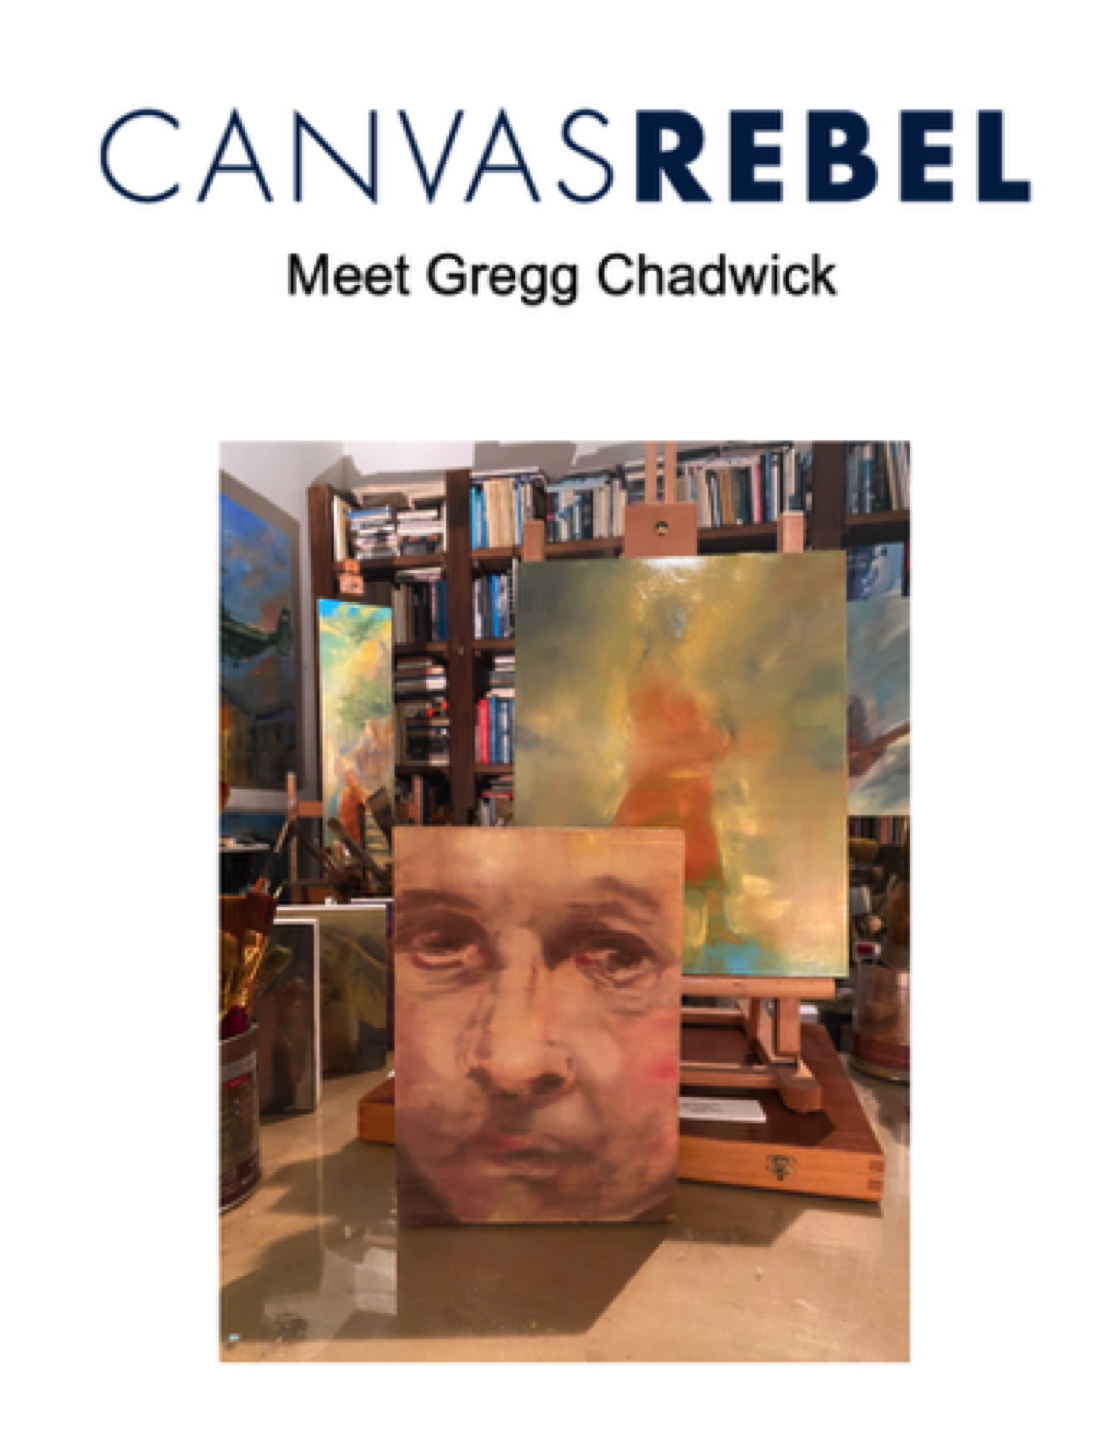 Gregg Chadwick's New Interview in Canvas Rebel
November 2023